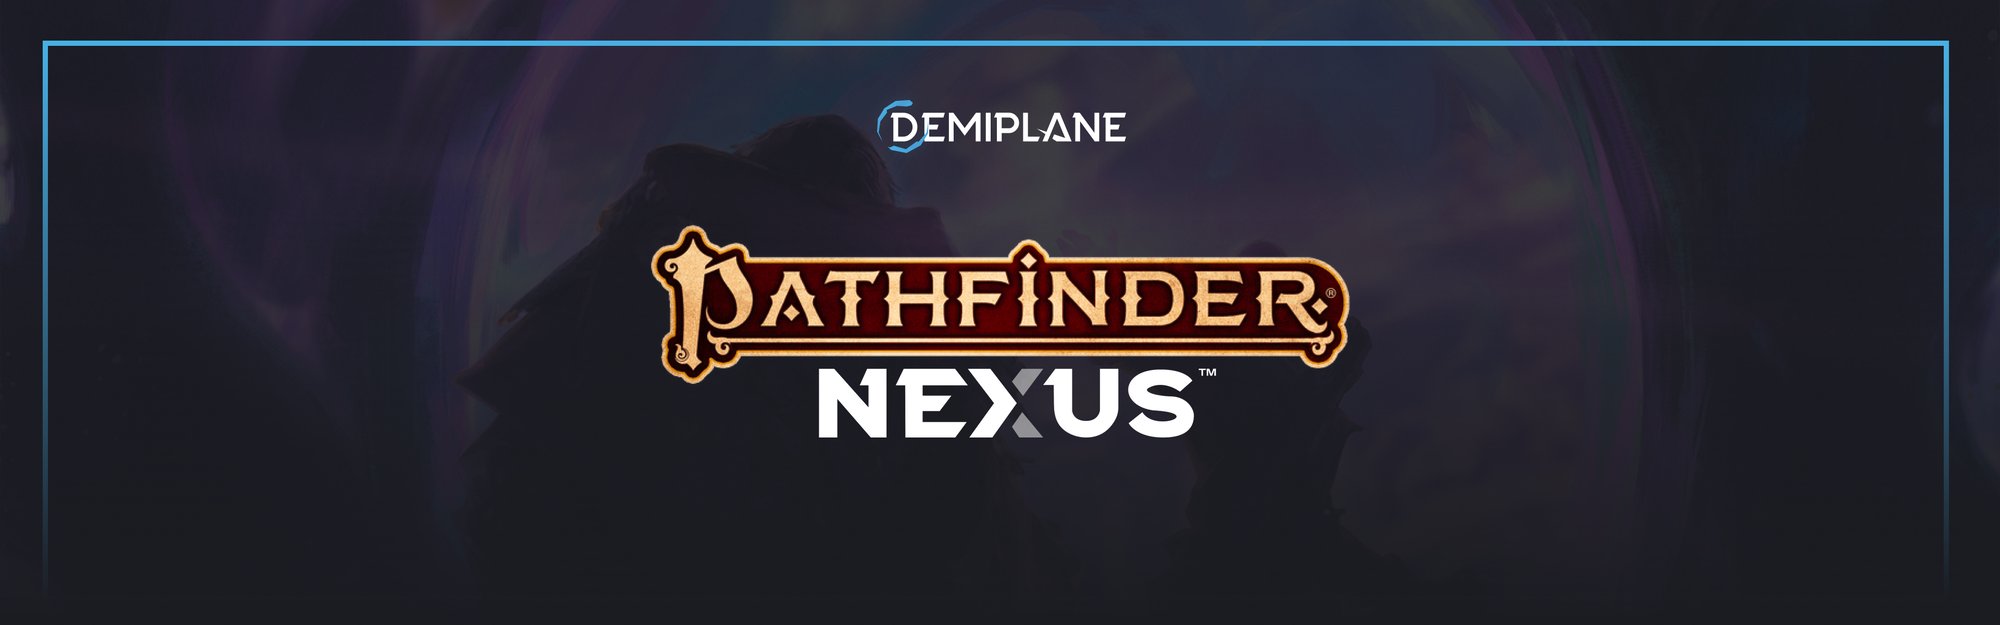 pathfinder-nexus-header-small